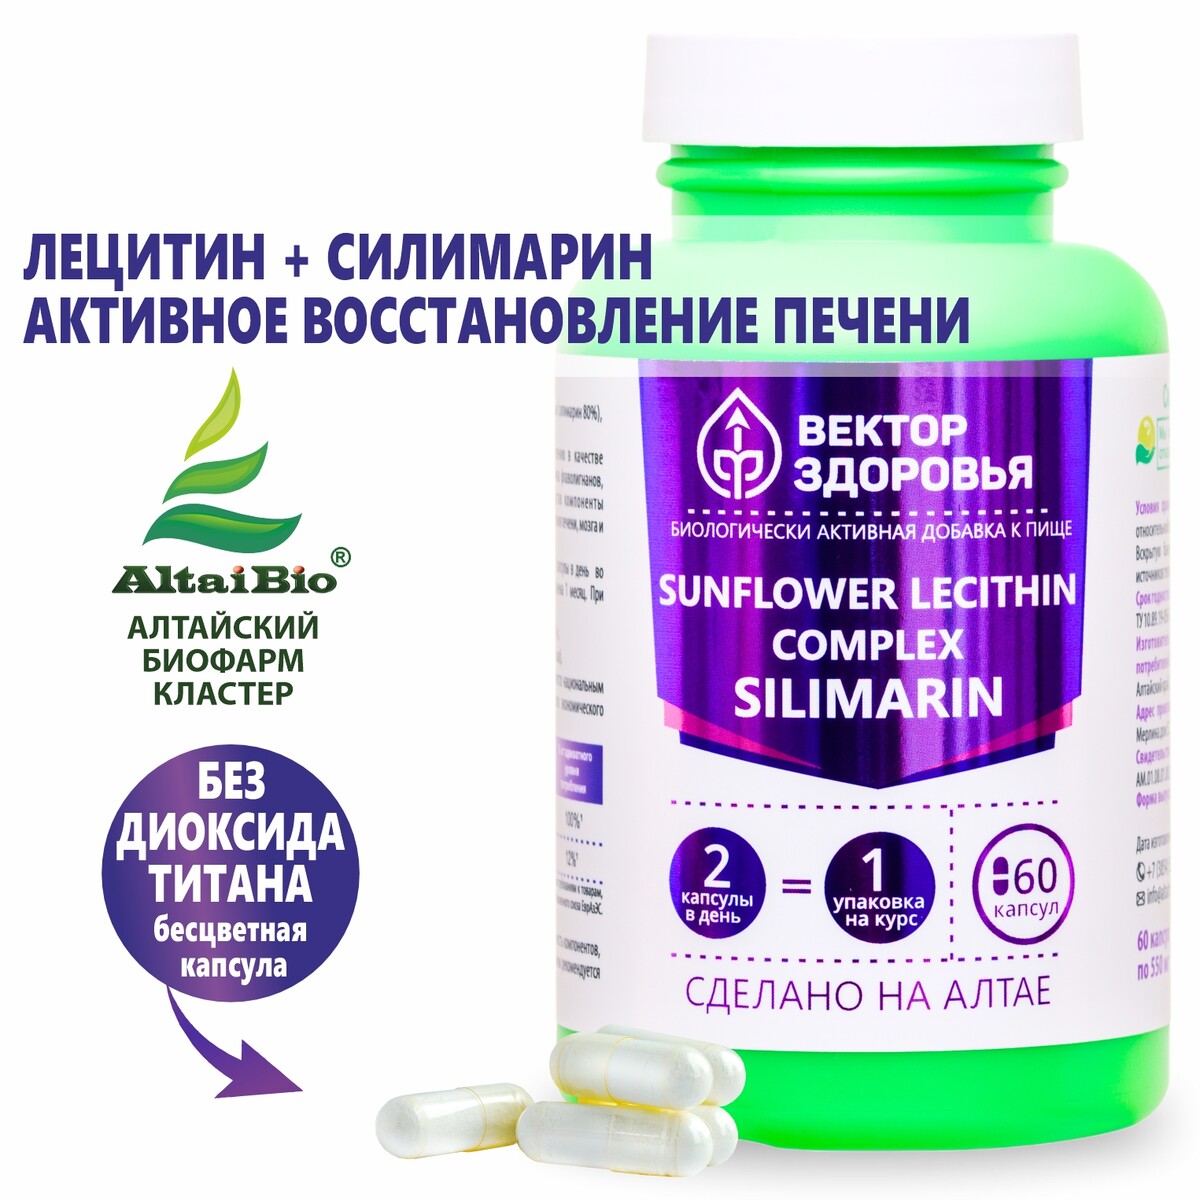  lecithin+ silimarin  +